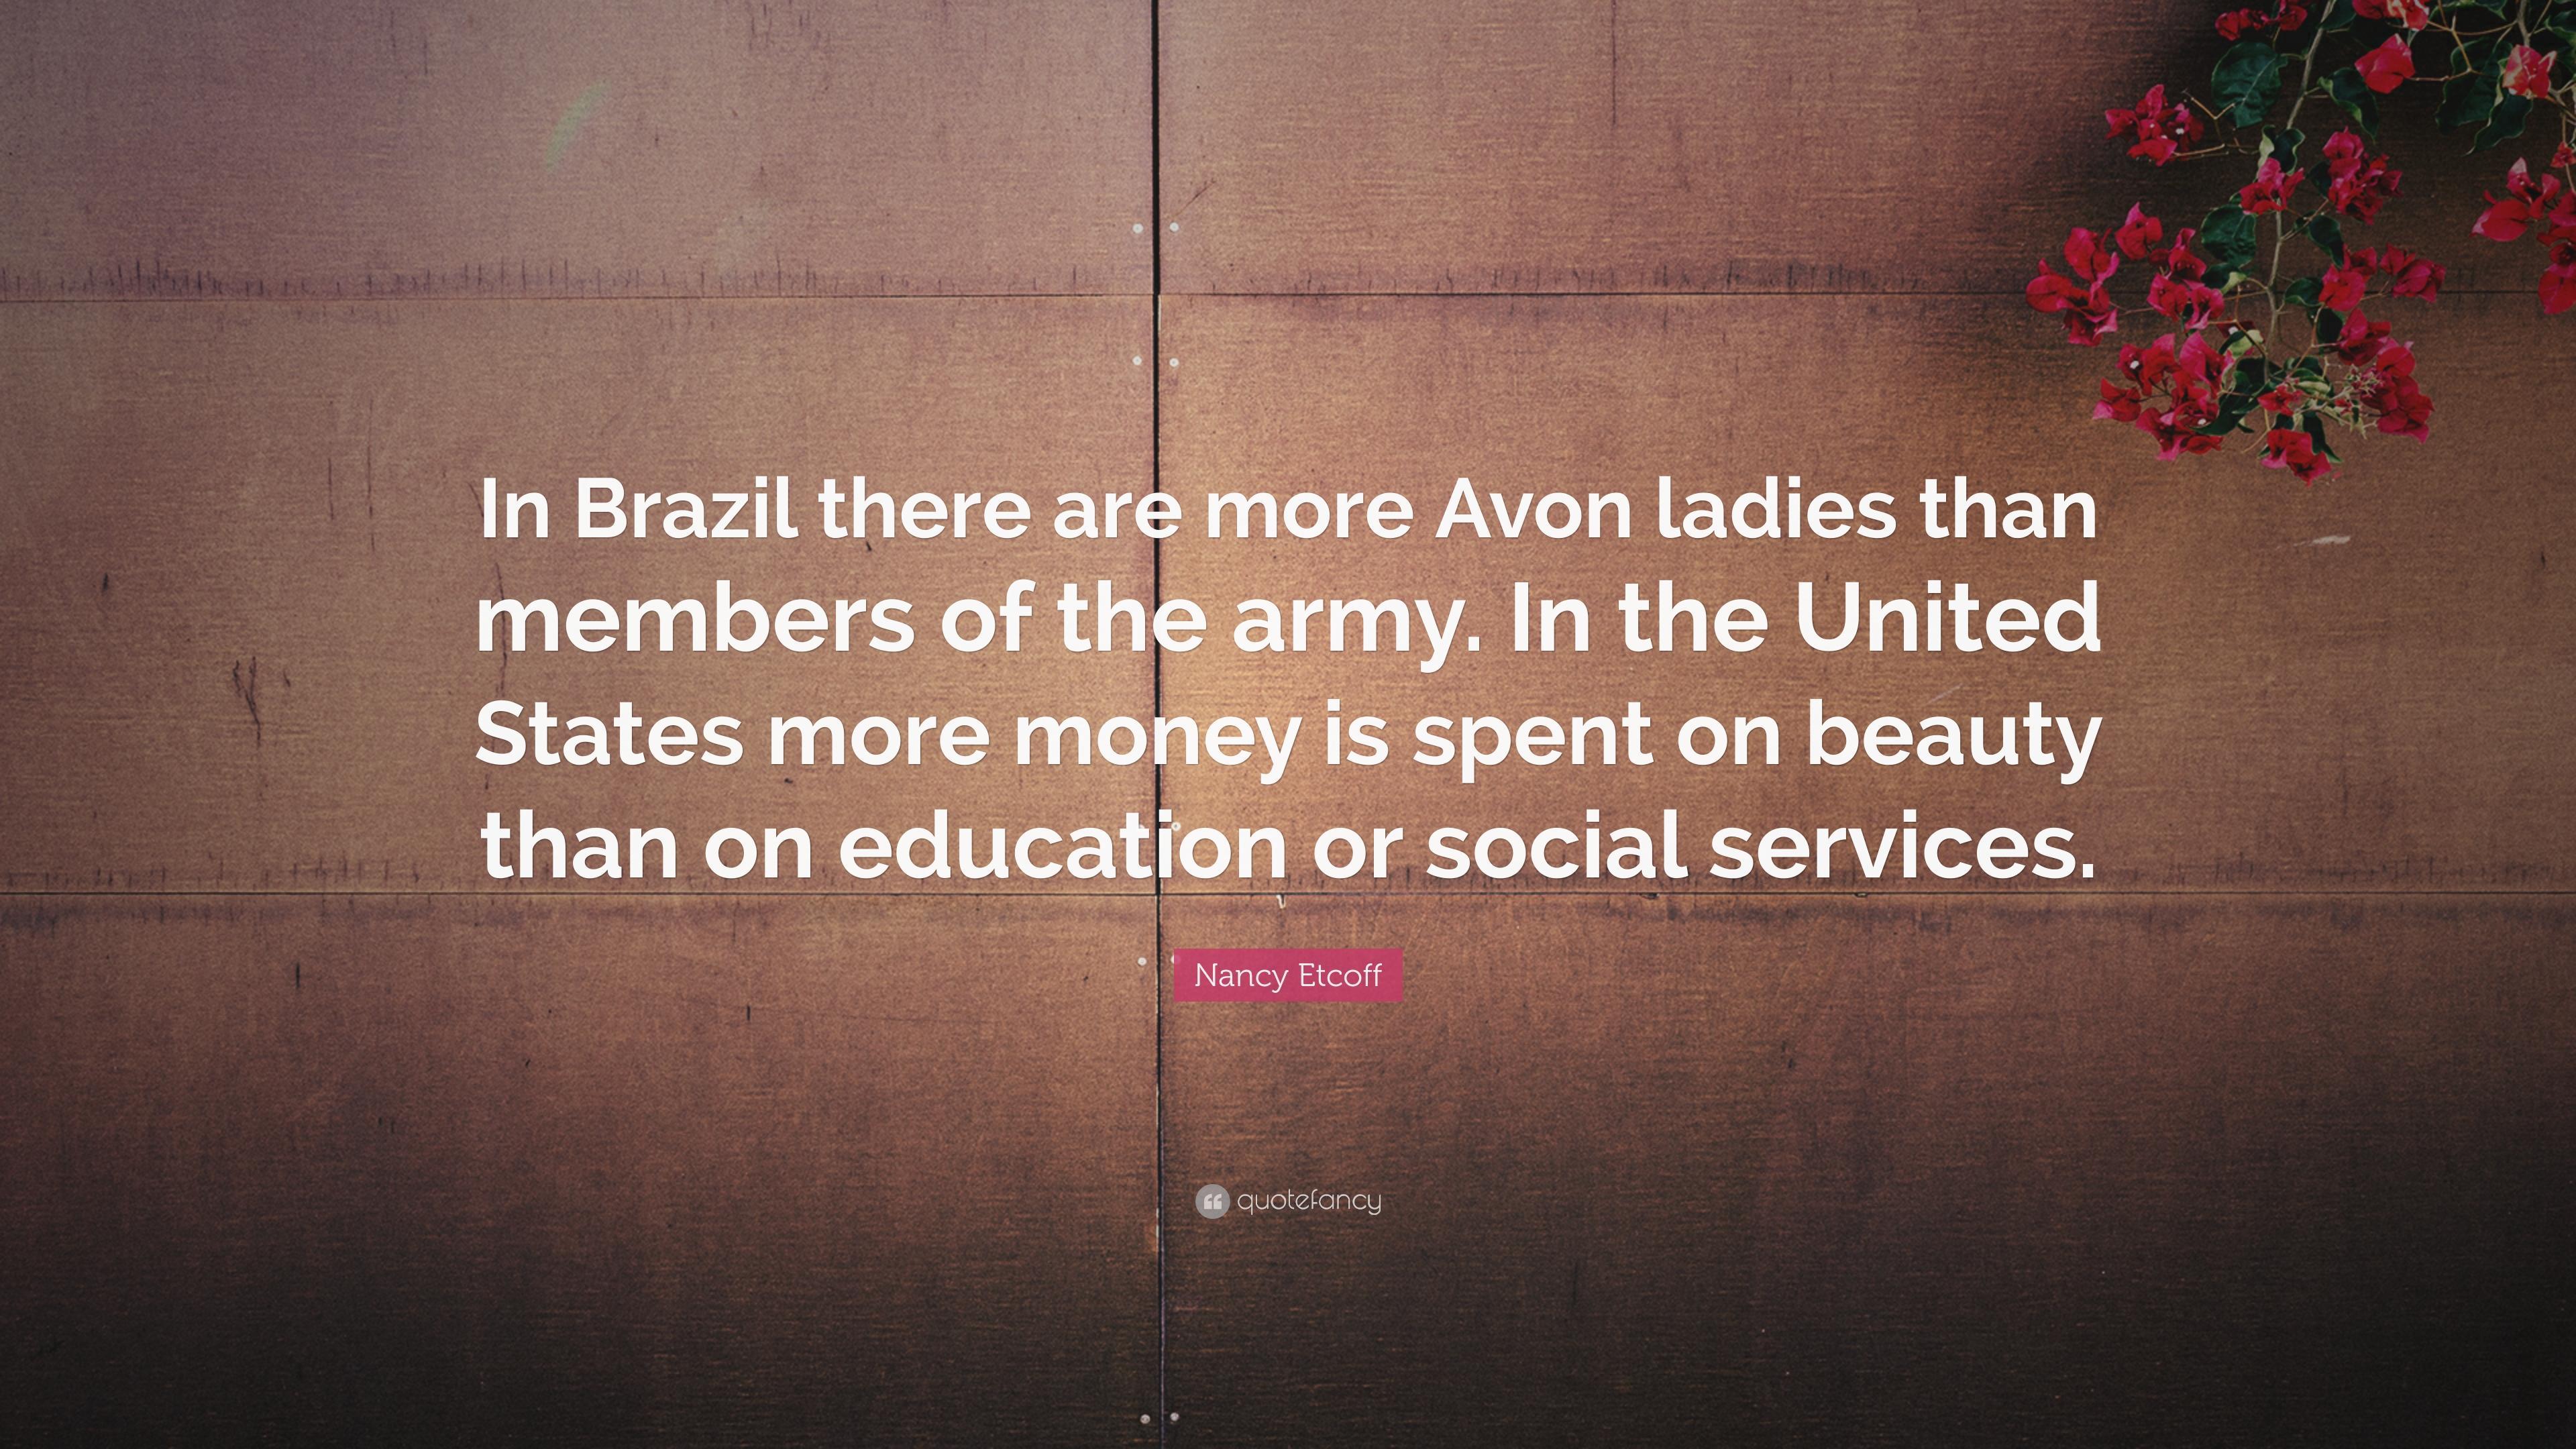 Nancy Etcoff Quote: “In Brazil there are more Avon ladies